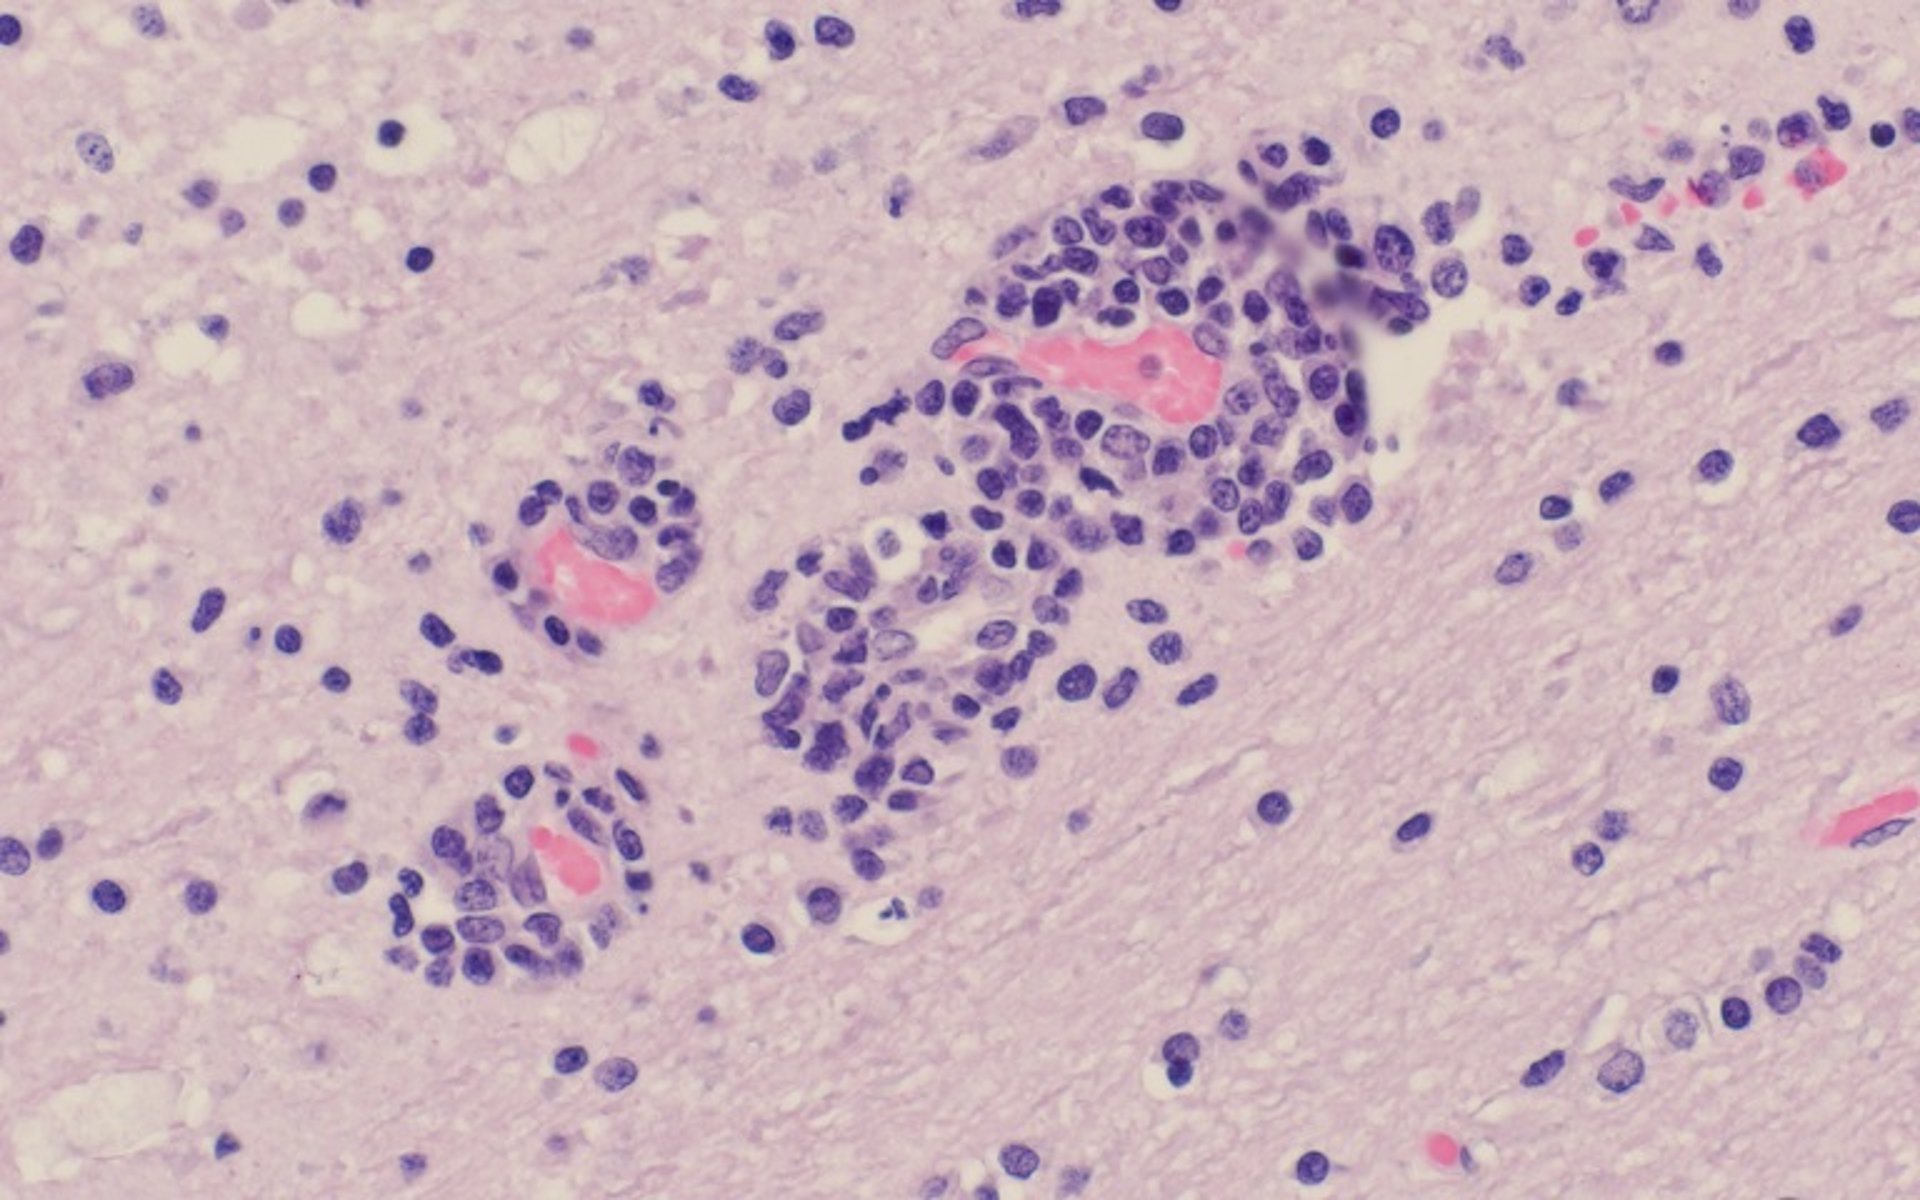 Teschovirus encephalomyelitis with gliosis and perivascular cuffing